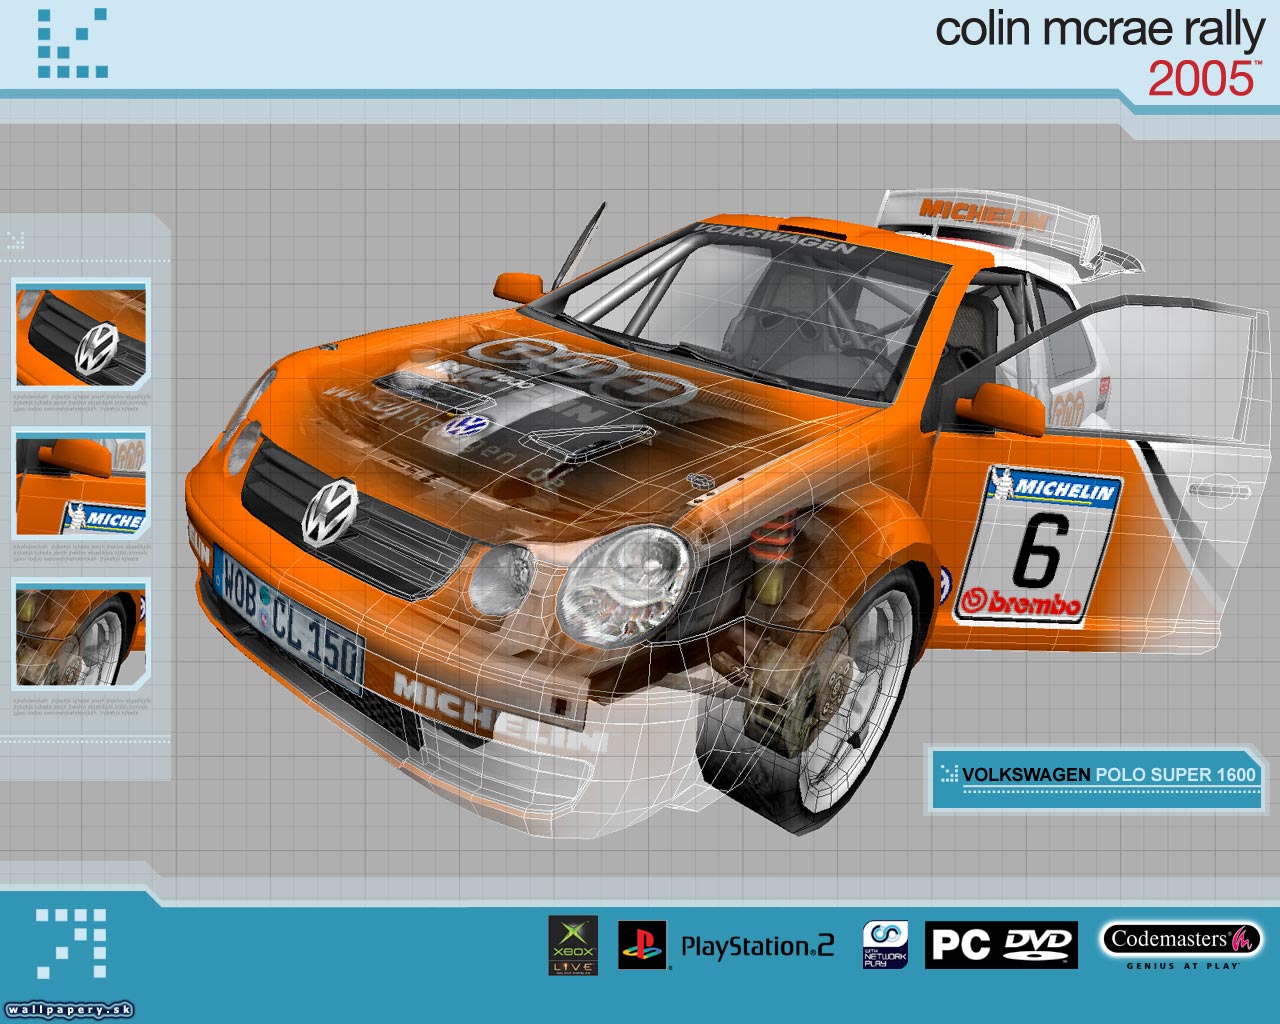 Colin McRae Rally 2005 - wallpaper 5